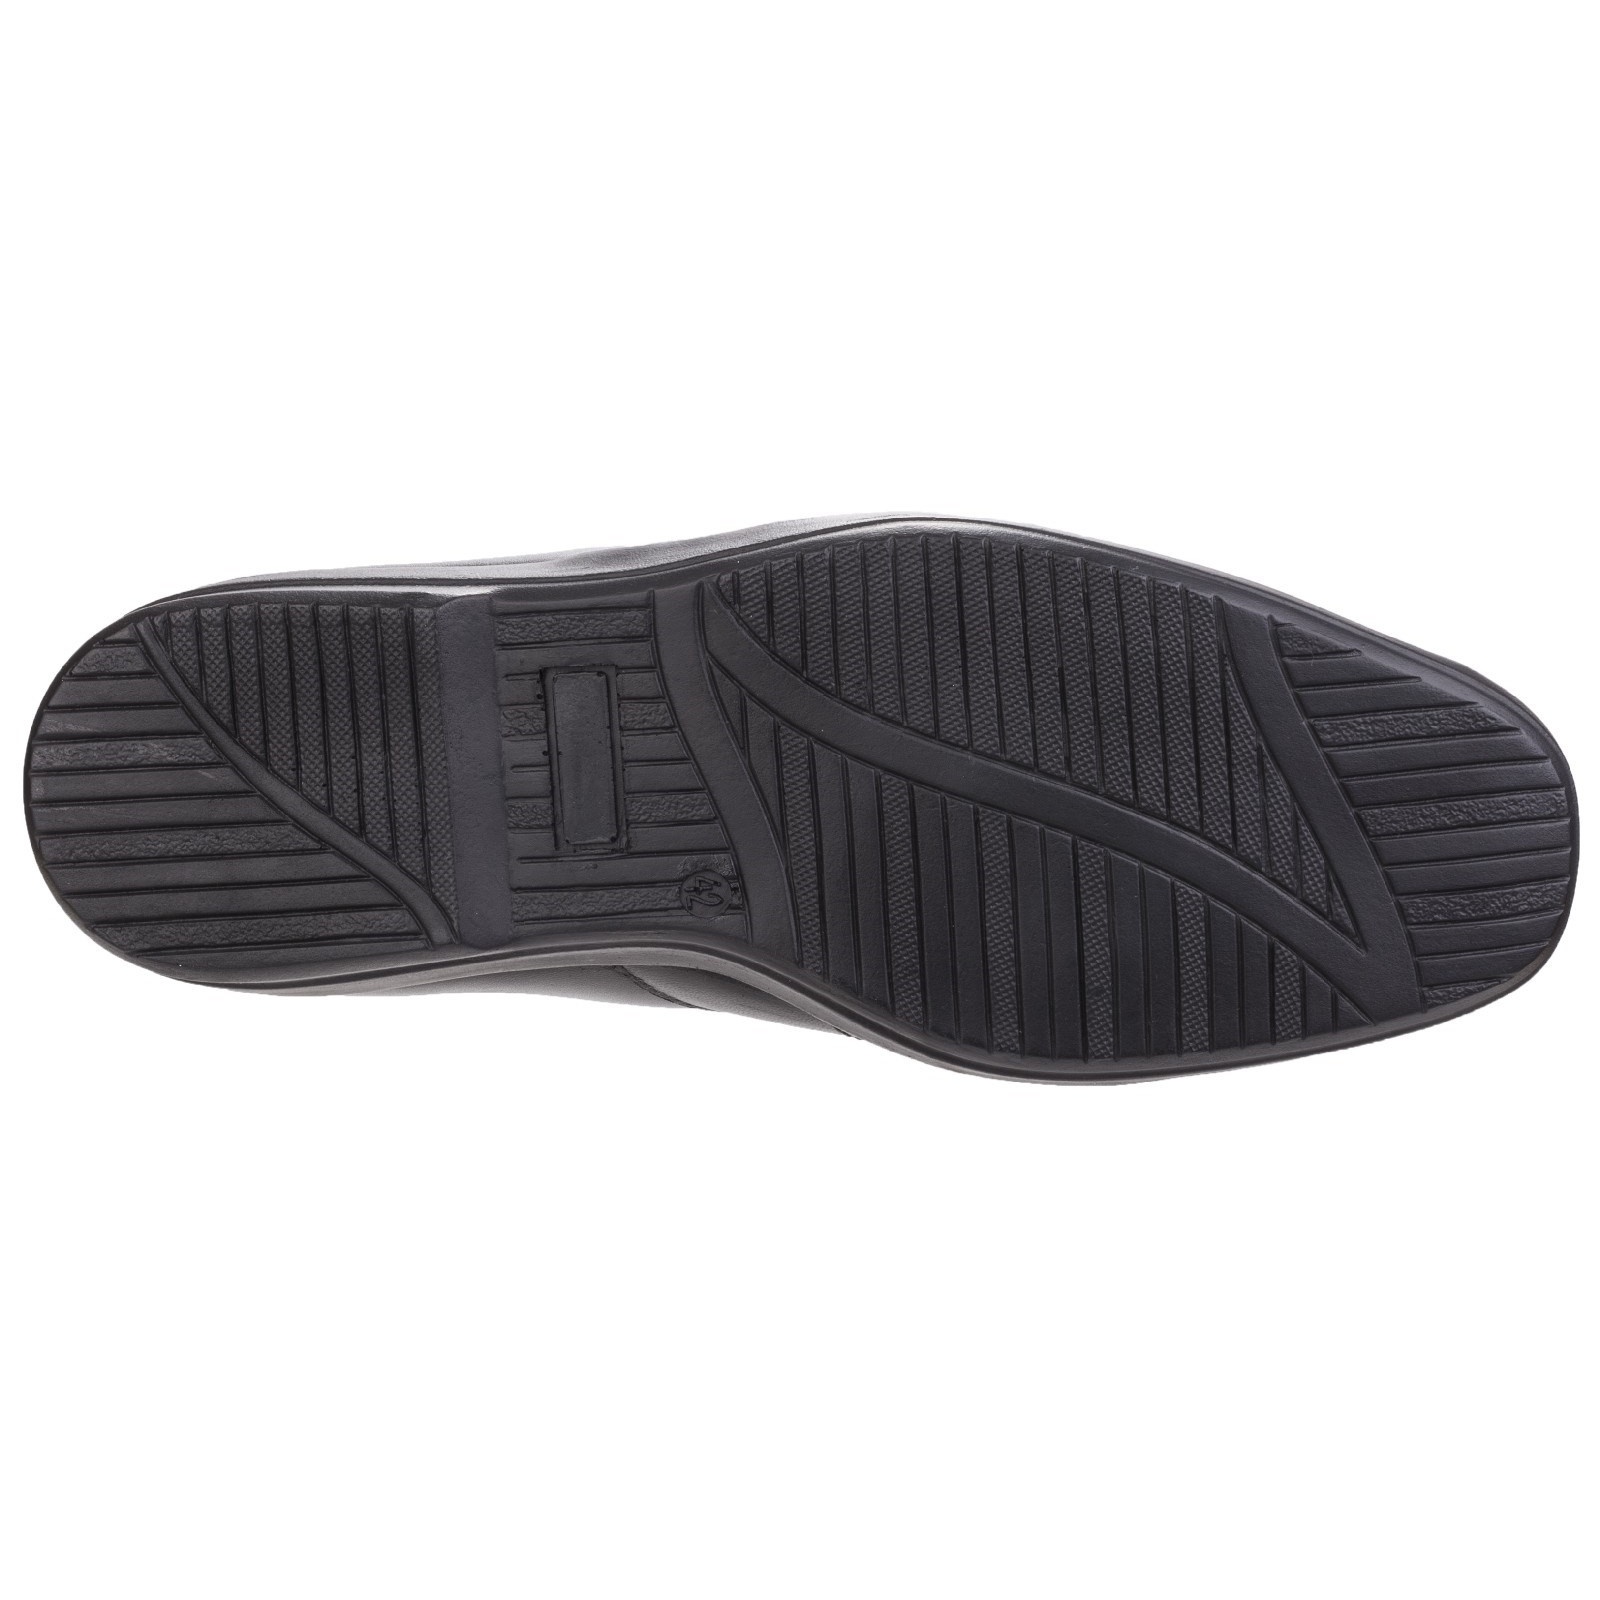 Fleet & Foster Mens Alan Formal Apron Toe Slip On Shoes - image 3 of 6